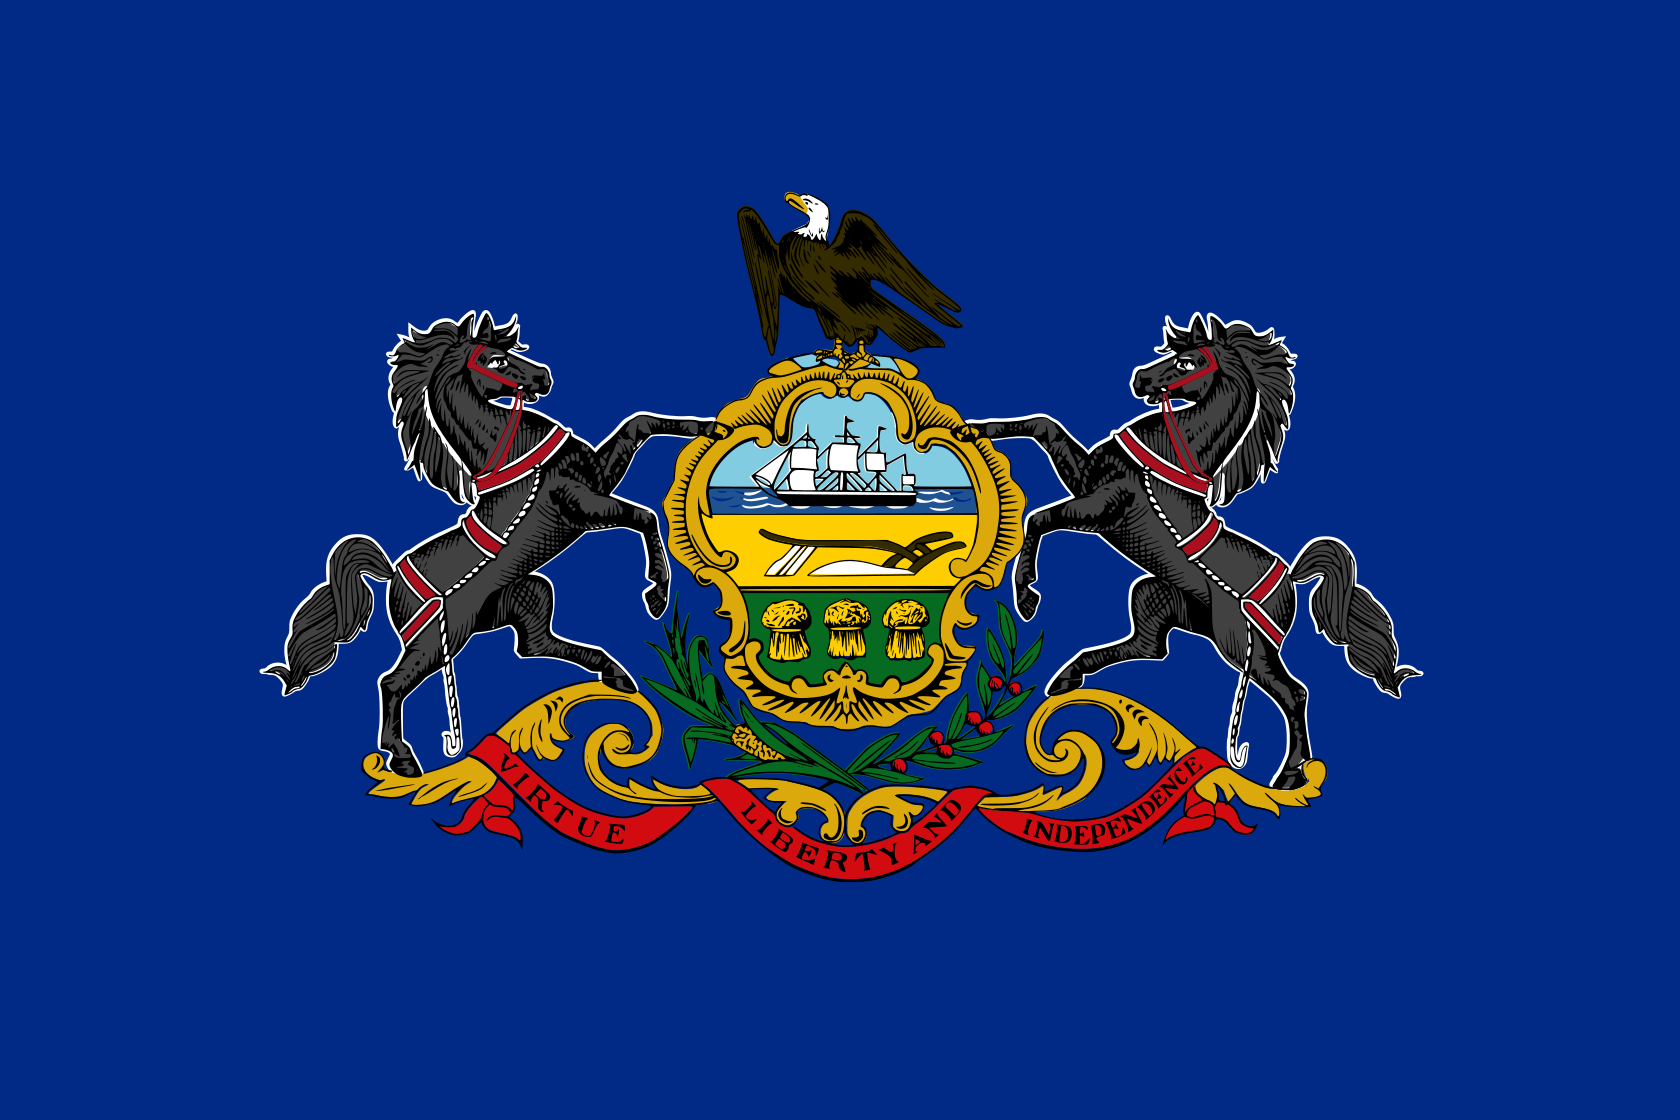 Obrázek vlajky státu USA Pensylvánie, členského státu Spojených států Amerických, v rozlišení v rozlišení 1680x1120 | Pensylvánie | Pensylvánská vlajka | Harrisburg | Philadelphia